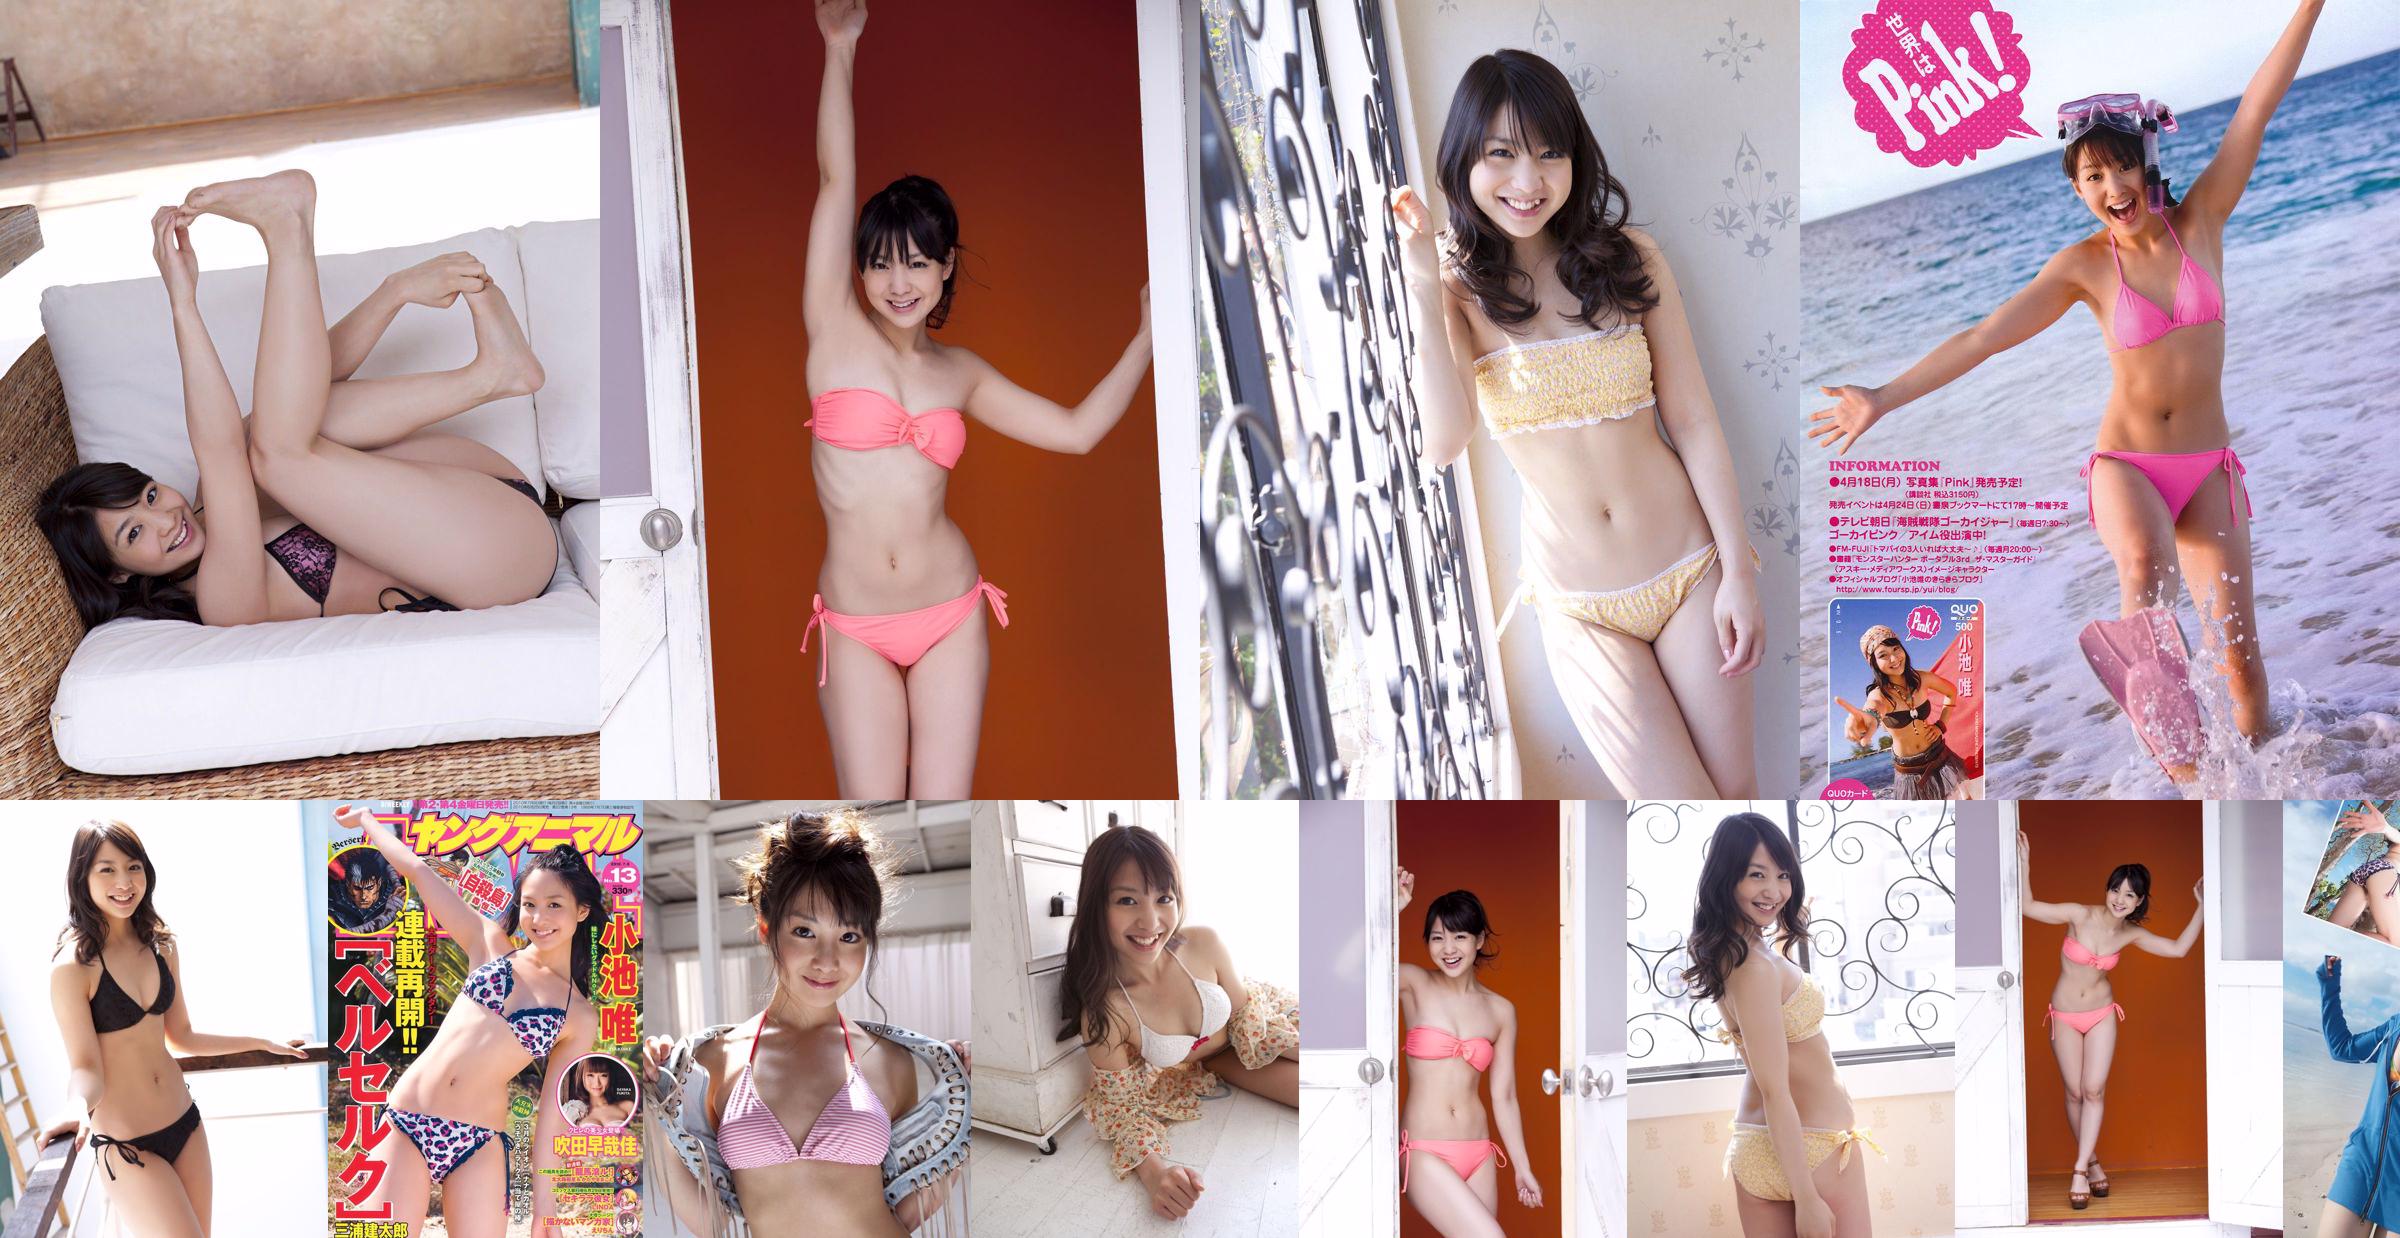 Yui Koike "FOREVER 21" [Sabra.net] Cover Girl No.1088b9 Página 3